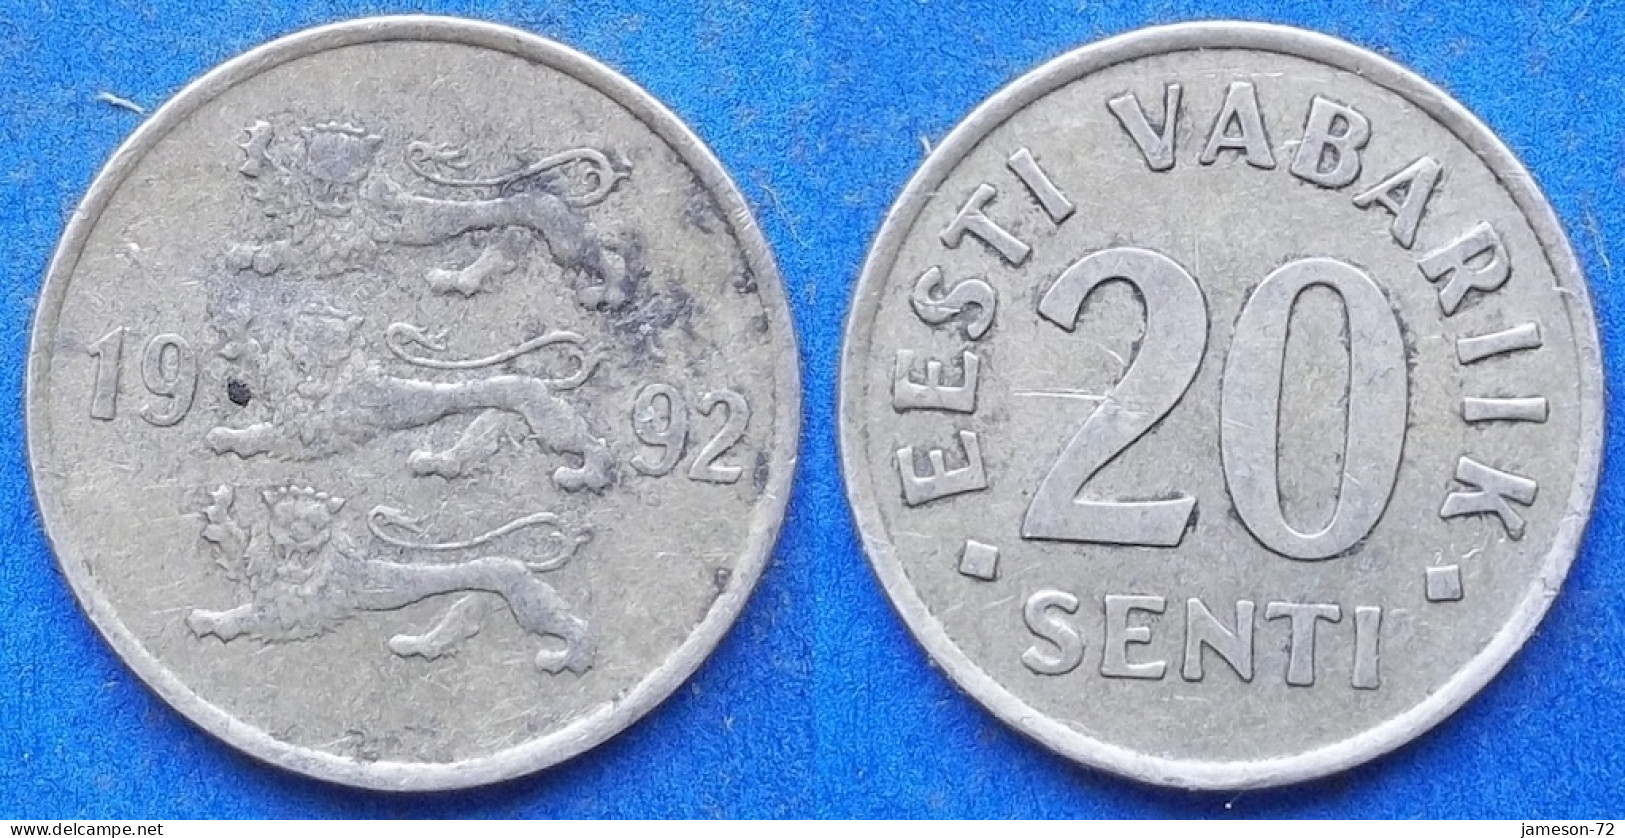 ESTONIA - 20 Senti 1992 KM# 23 Kroon Coinage (1991- 2010) - Edelweiss Coins - Estonia